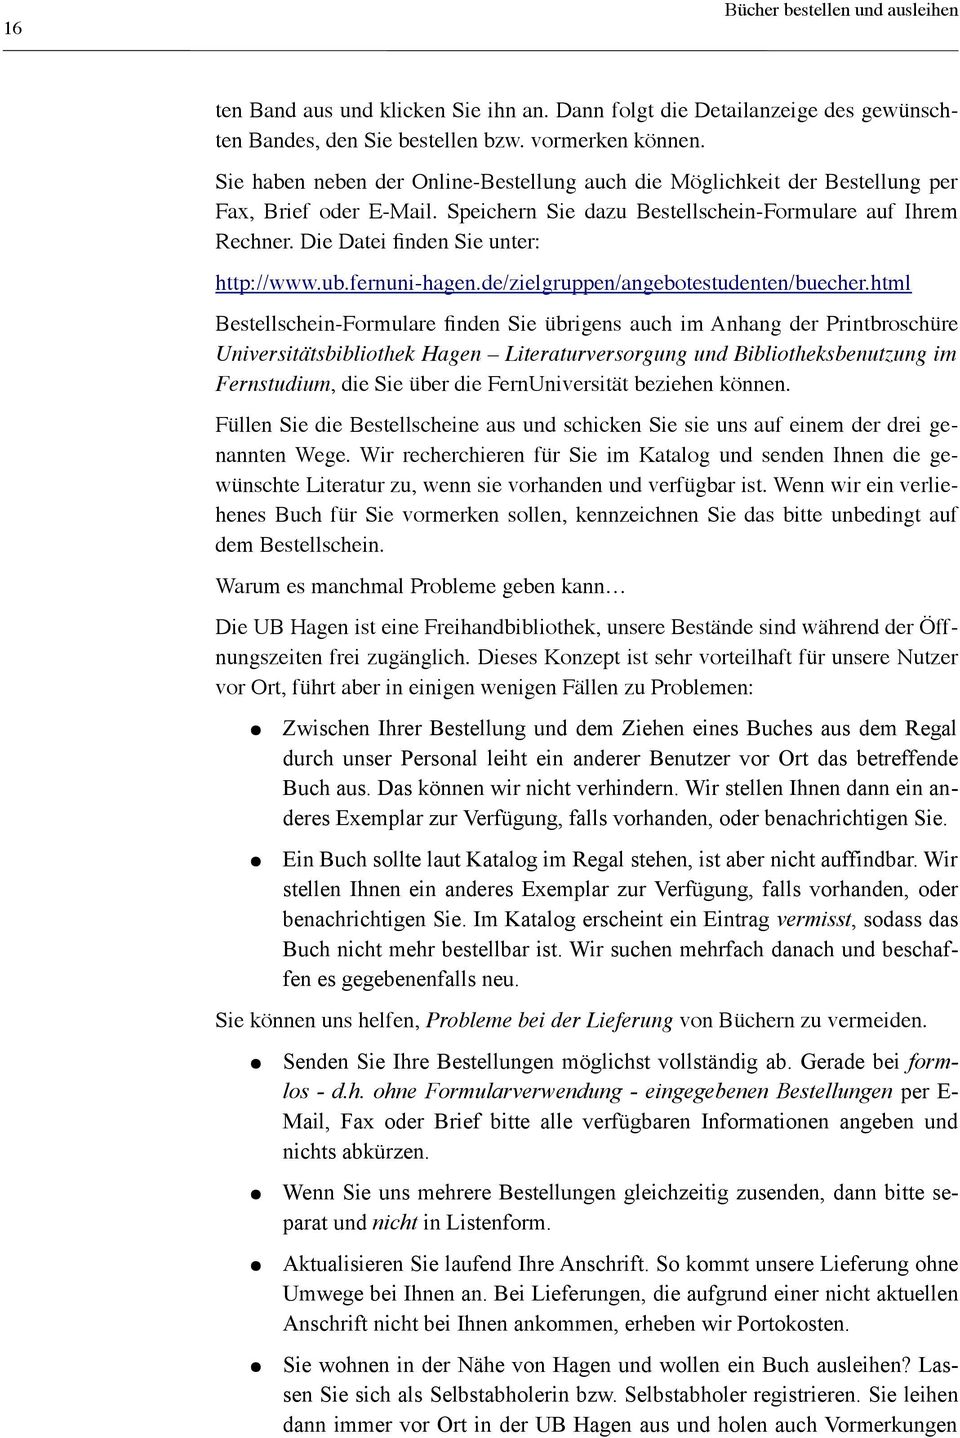 Die Datei finden Sie unter: http://www.ub.fernuni-hagen.de/zielgruppen/angebotestudenten/buecher.